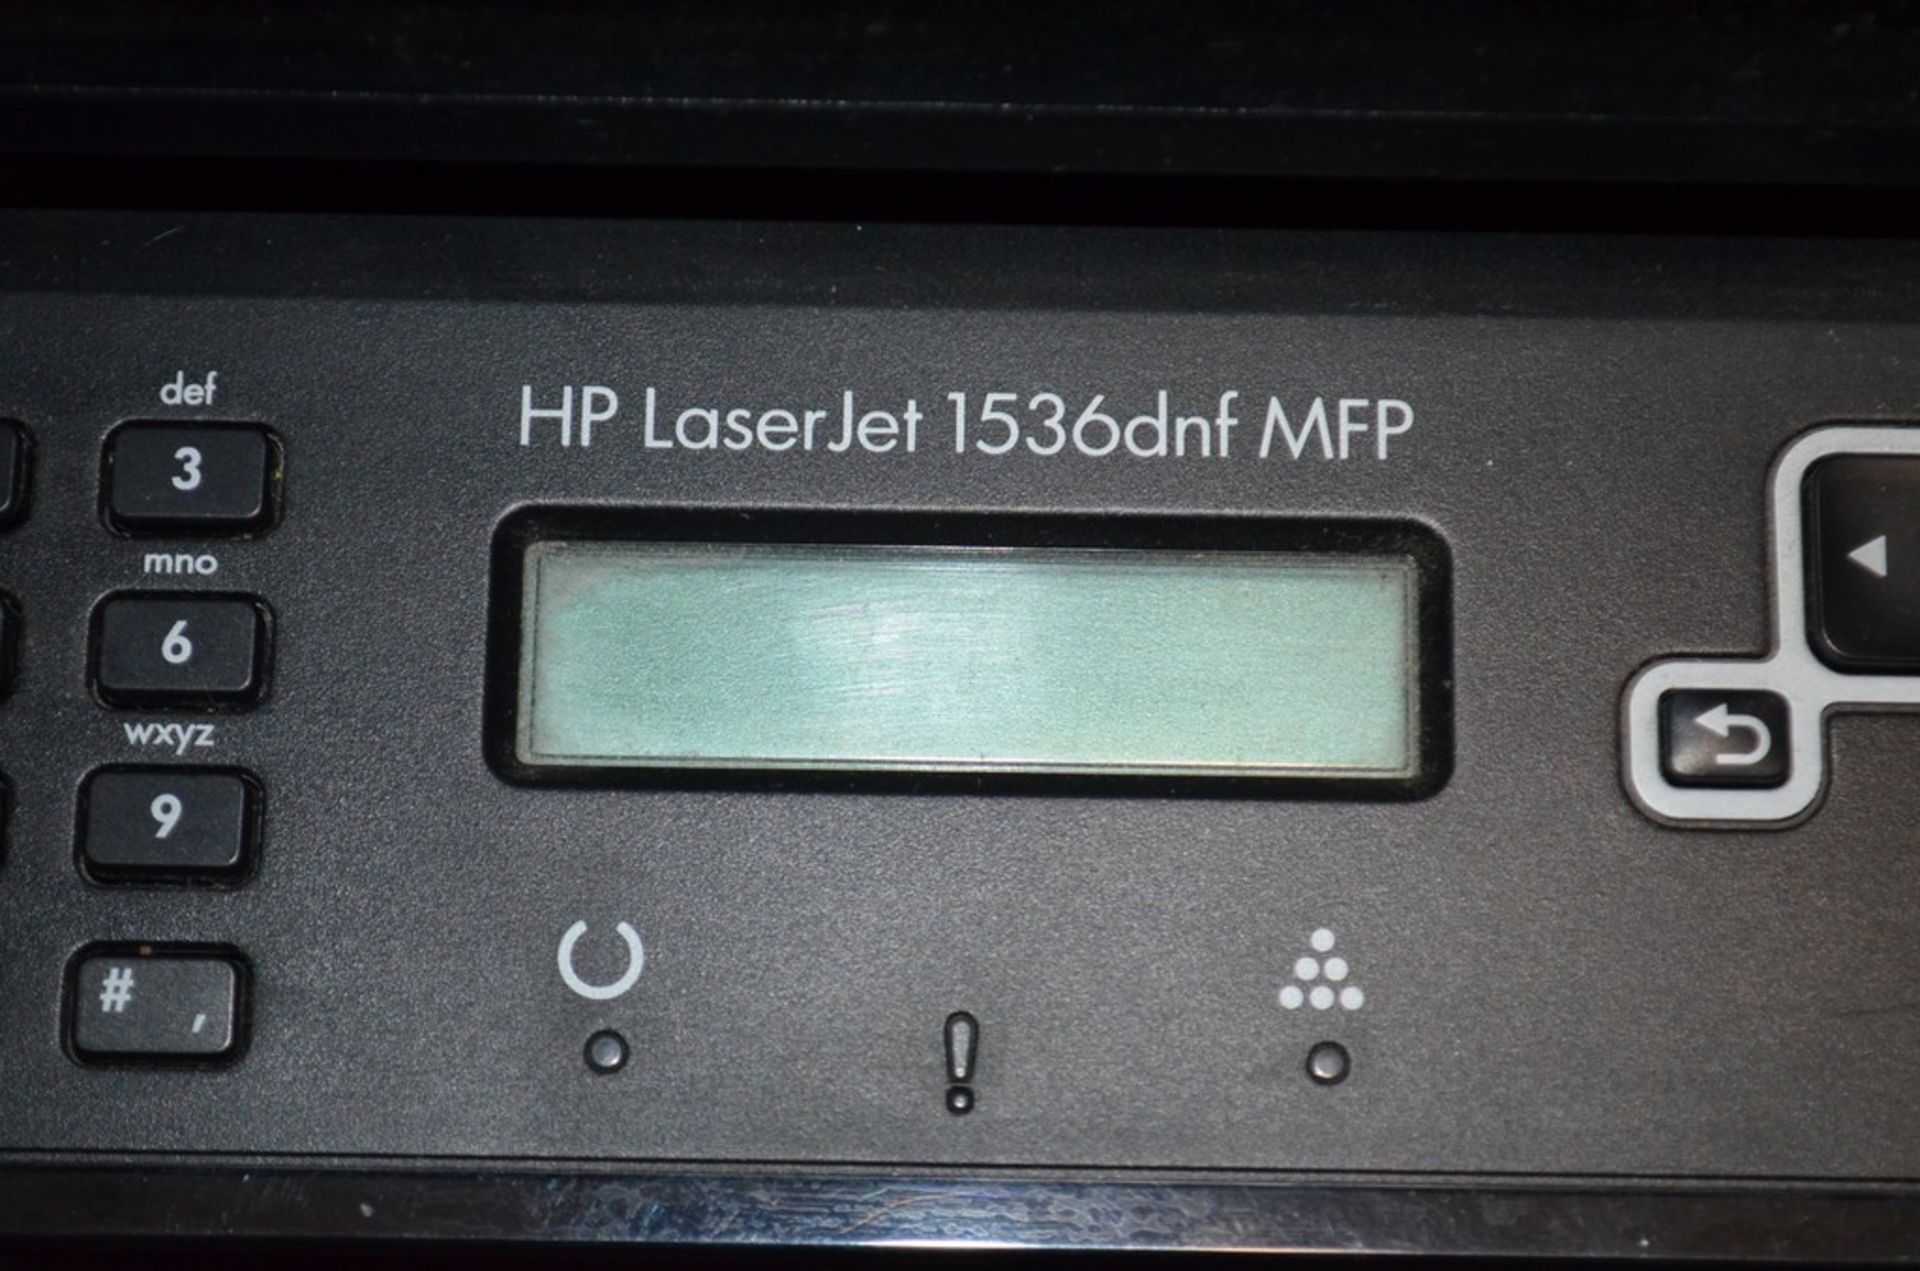 Hewlett Packard LaserJet 1536dnf MFP Printer (Under Desk); Location in Plant: Large Training Room - Image 3 of 3